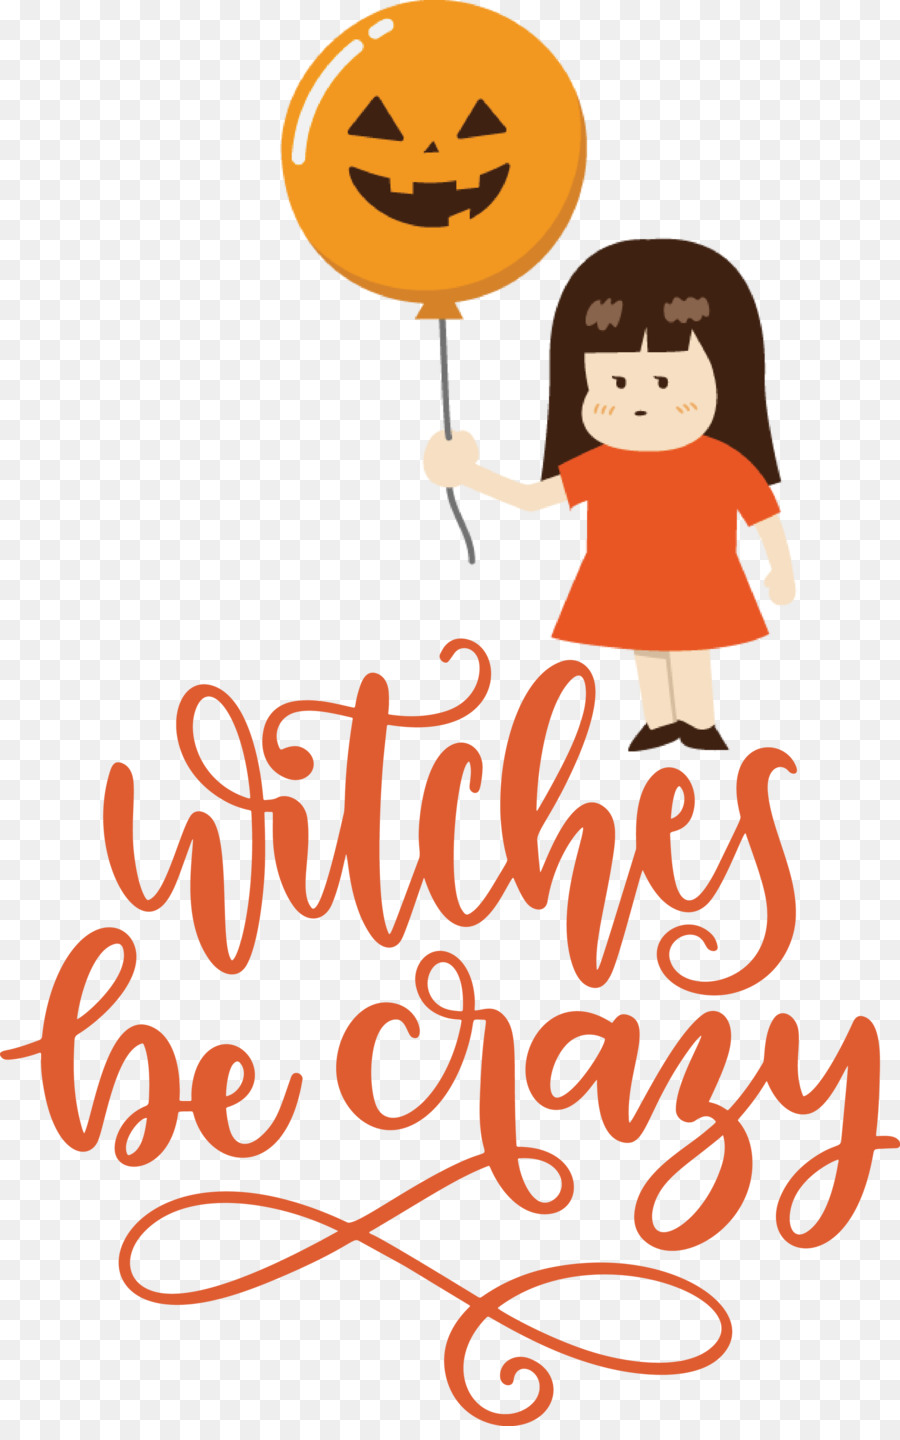 Happy Halloween Witches Sii pazzo - 